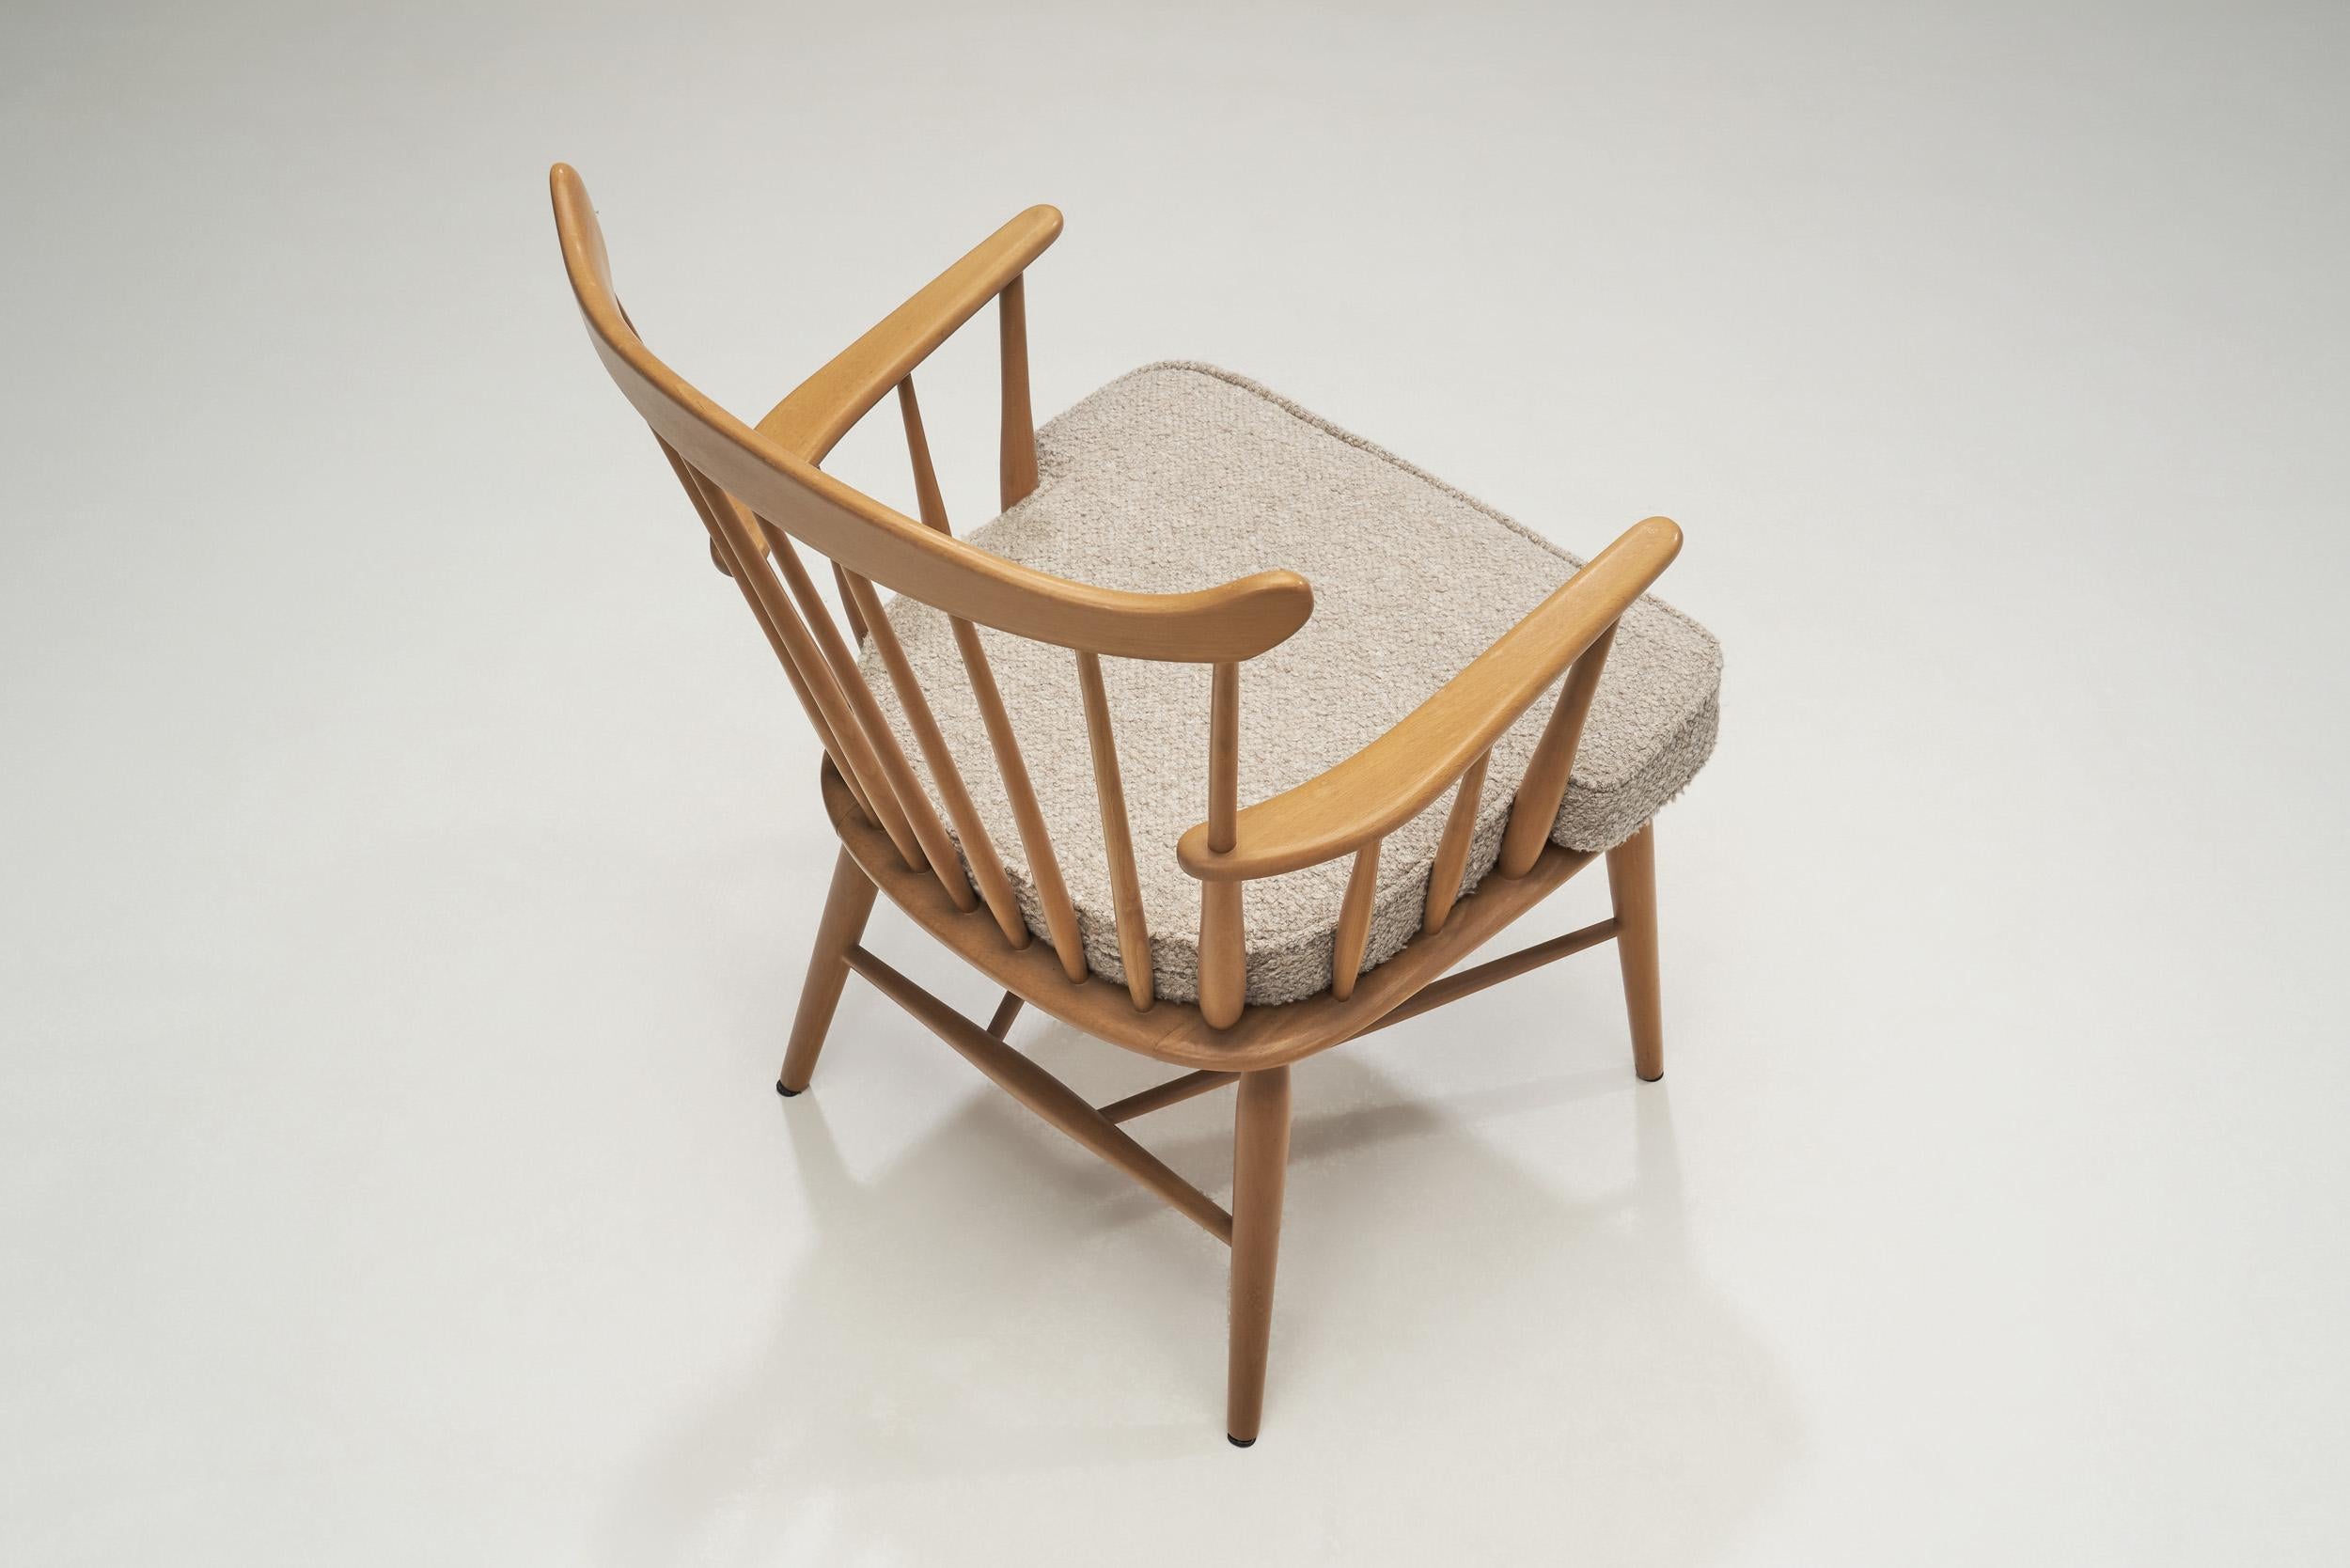 Mid-20th Century Beech Slatback Chairs by Børge Mogensen for FDB Møbler, Denmark 1960s For Sale